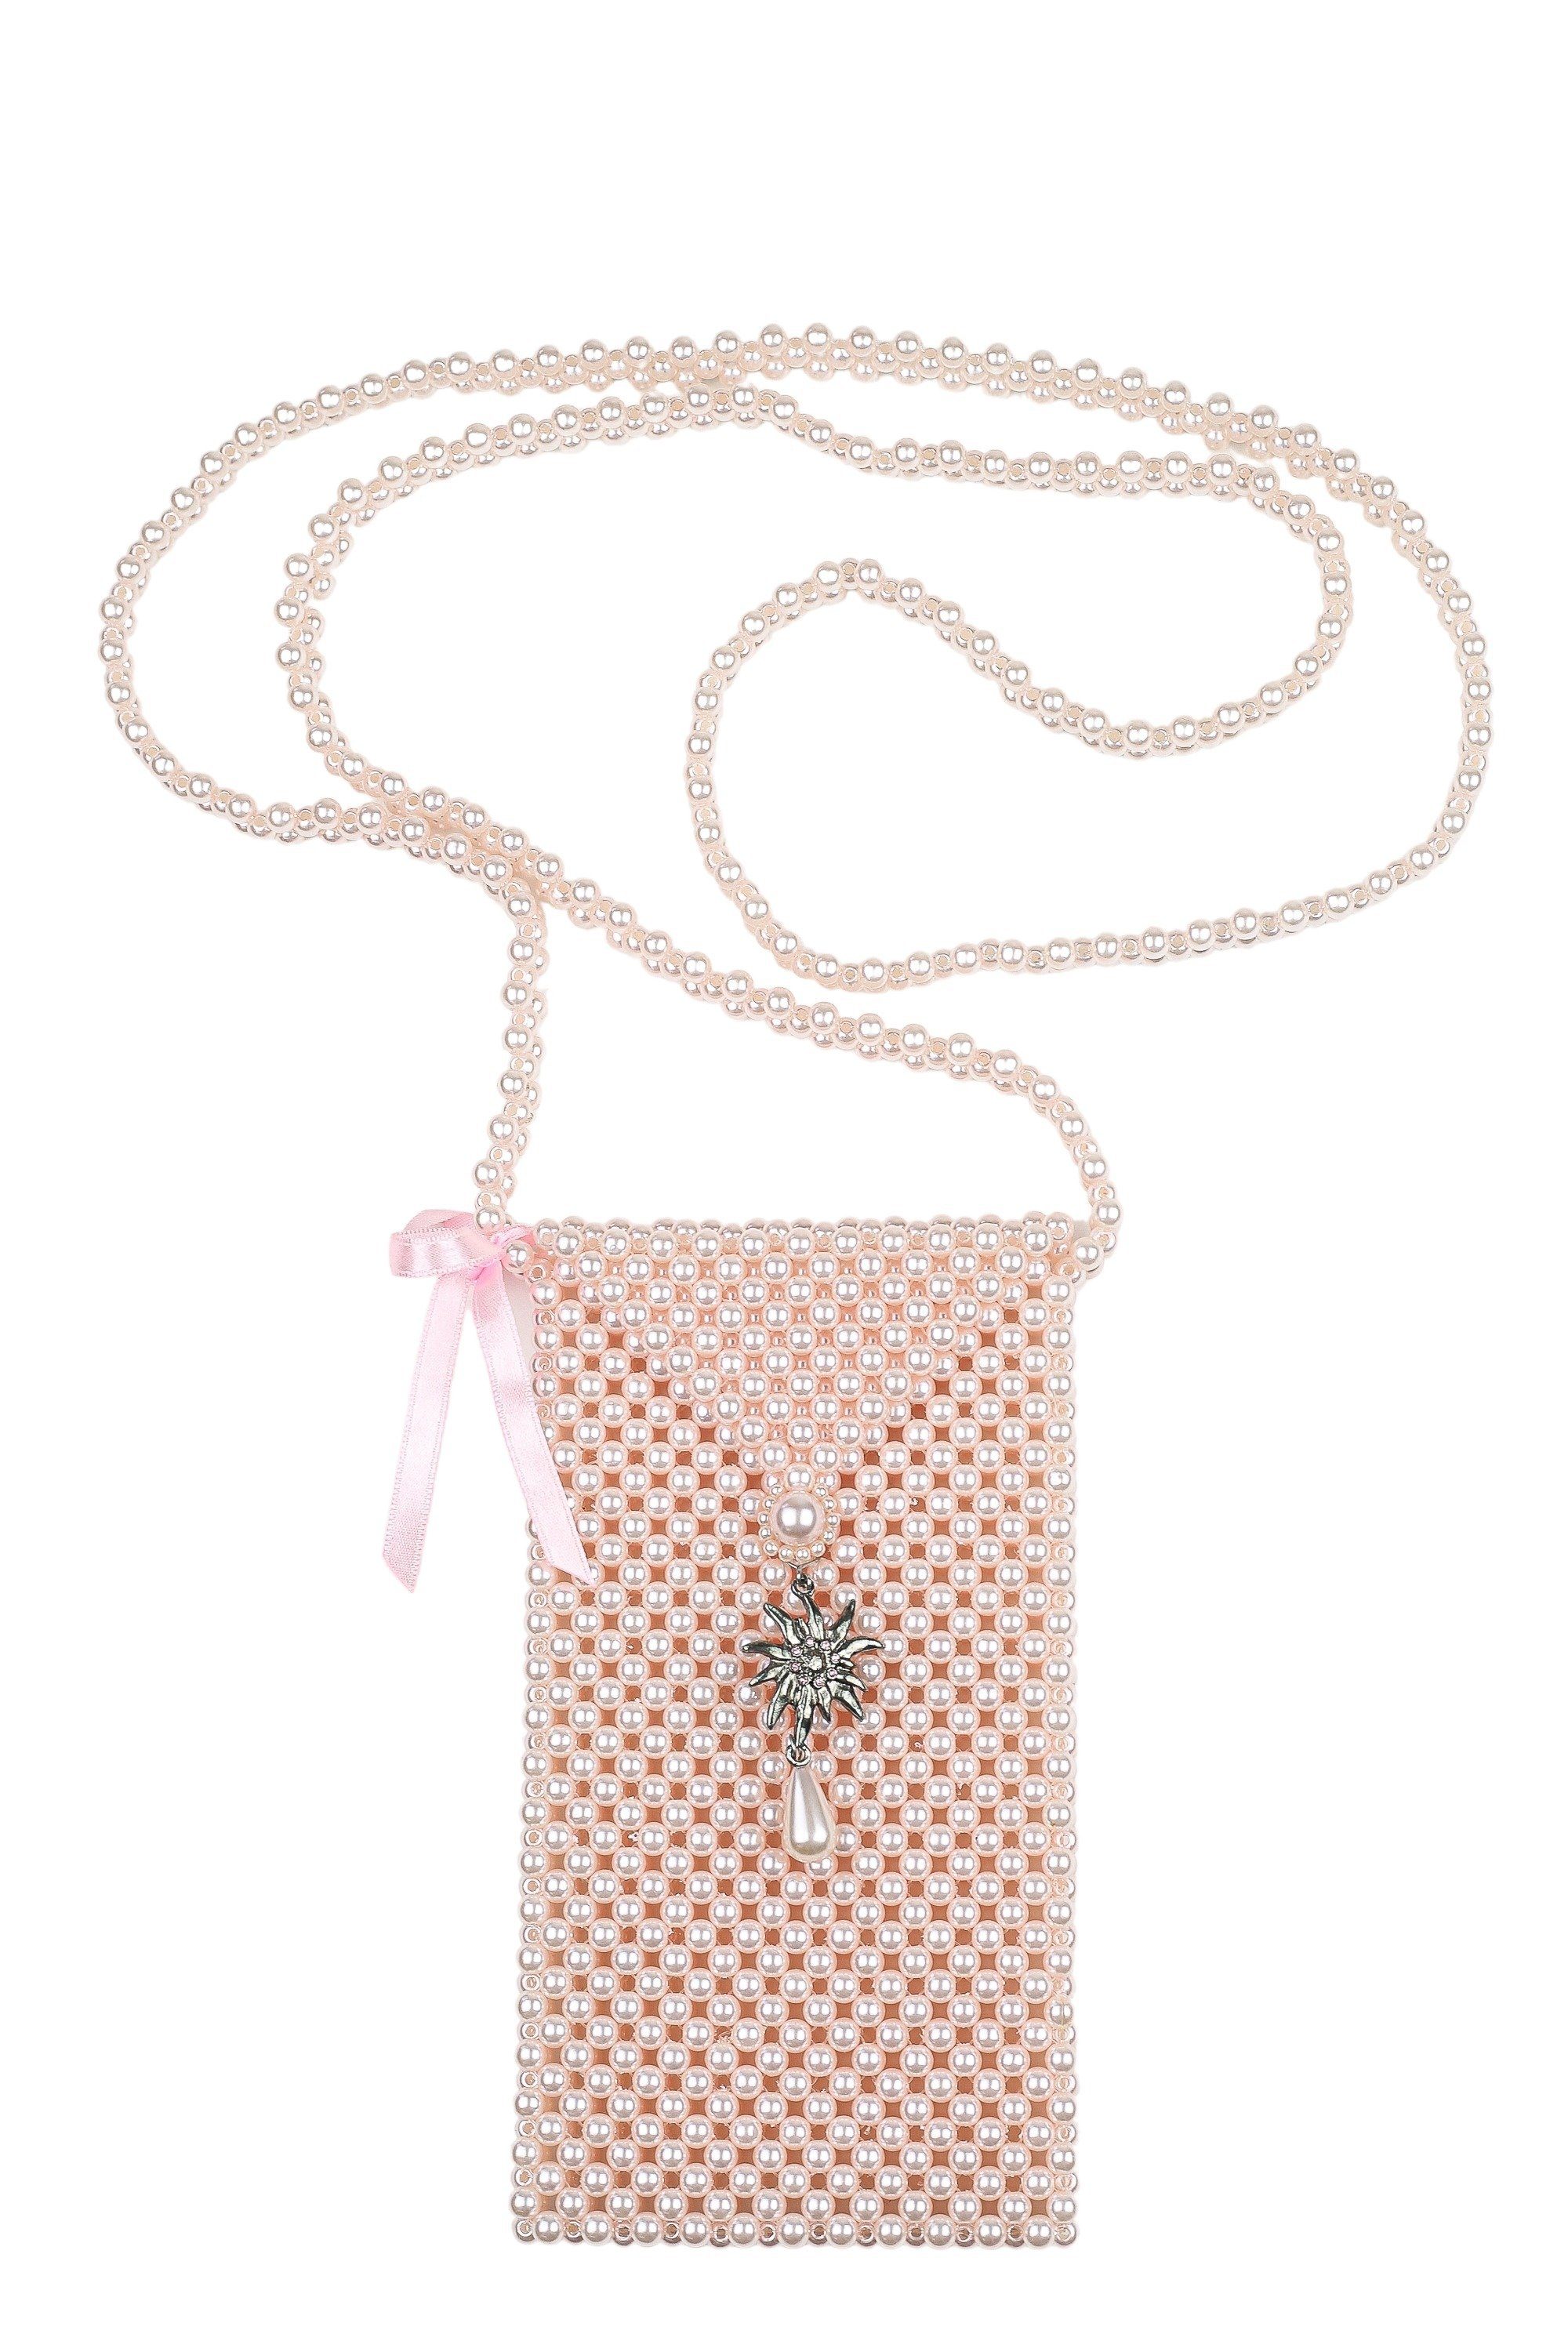 Rebell hunderten Umhängetasche rosa Perlen, Edelweiß aus Alpenperle, mit Allgäu